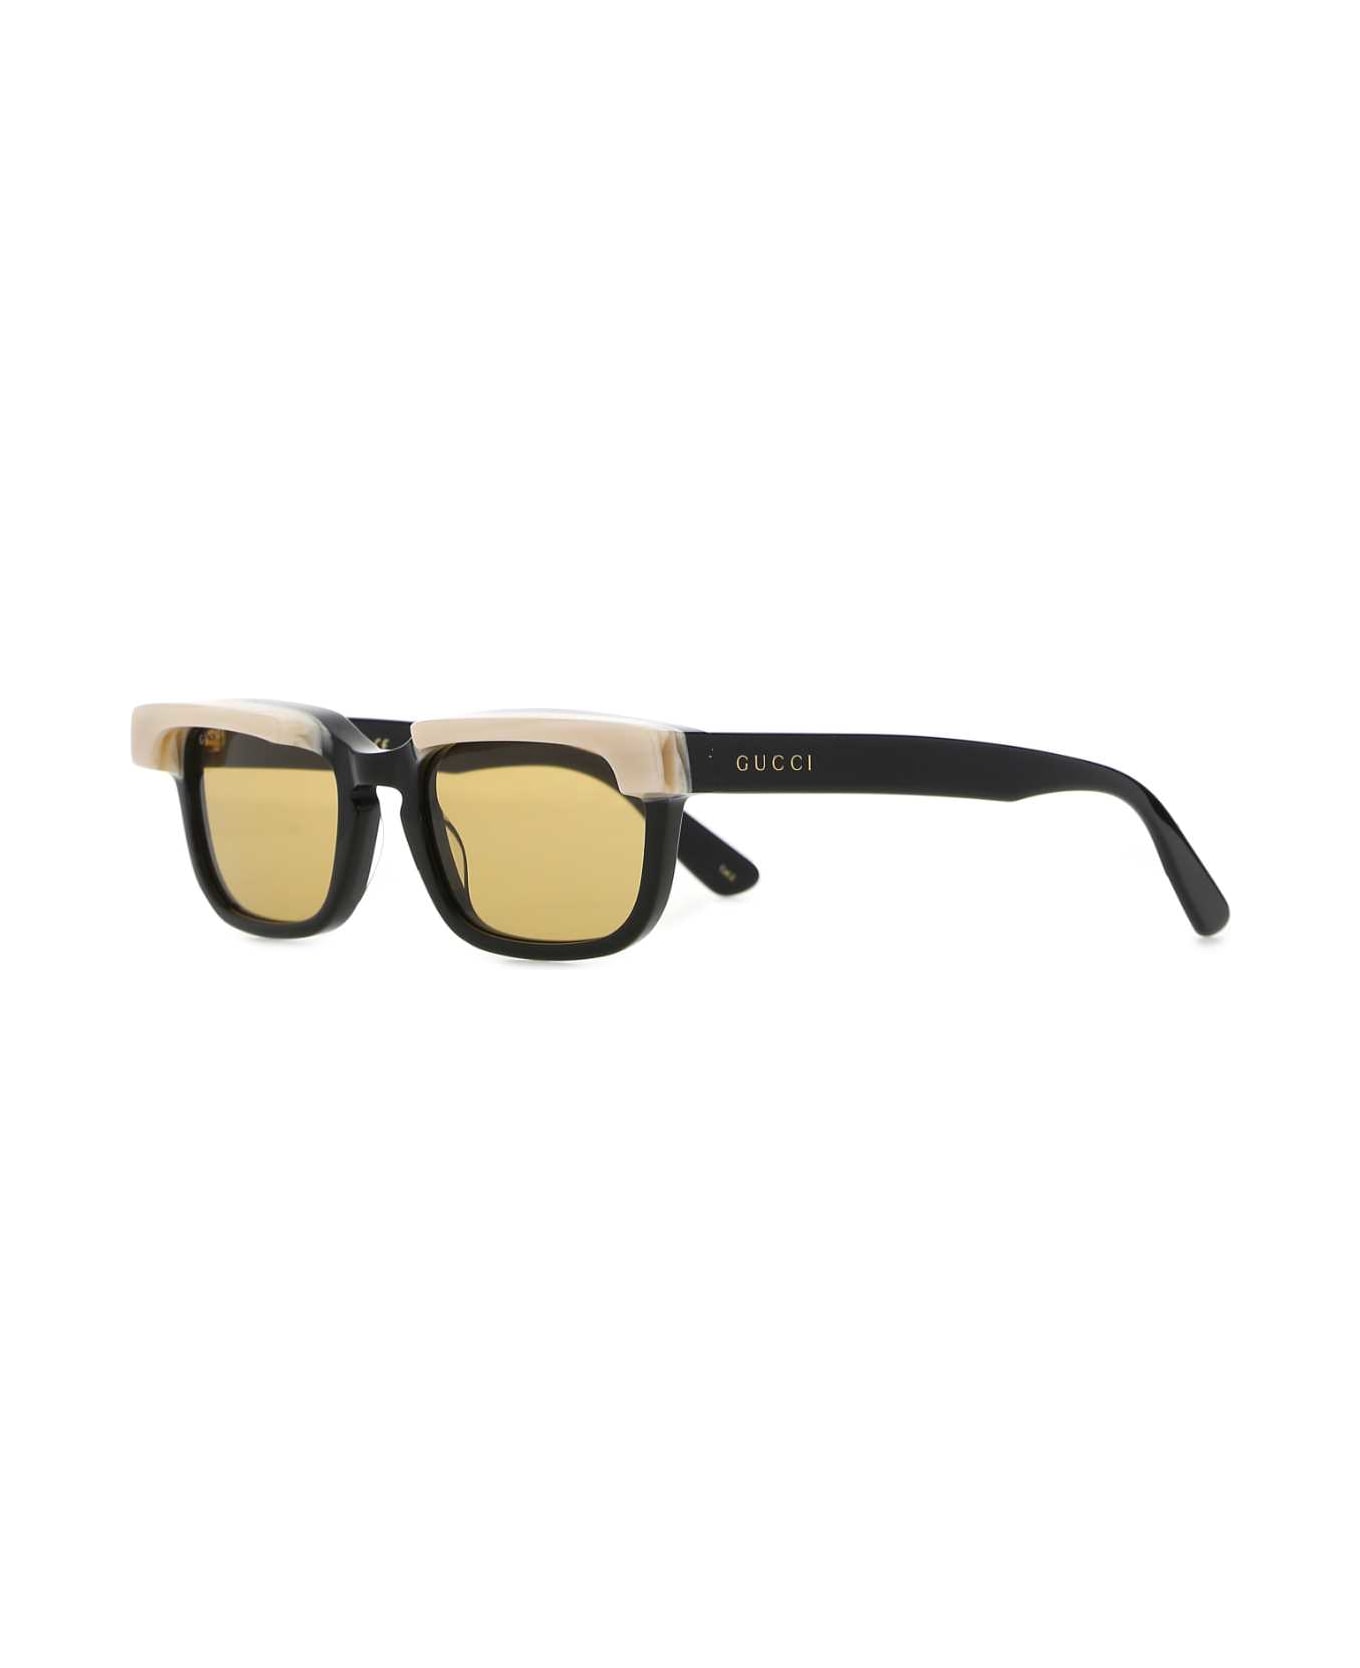 Gucci Black Acetate Sunglasses - 1070 サングラス